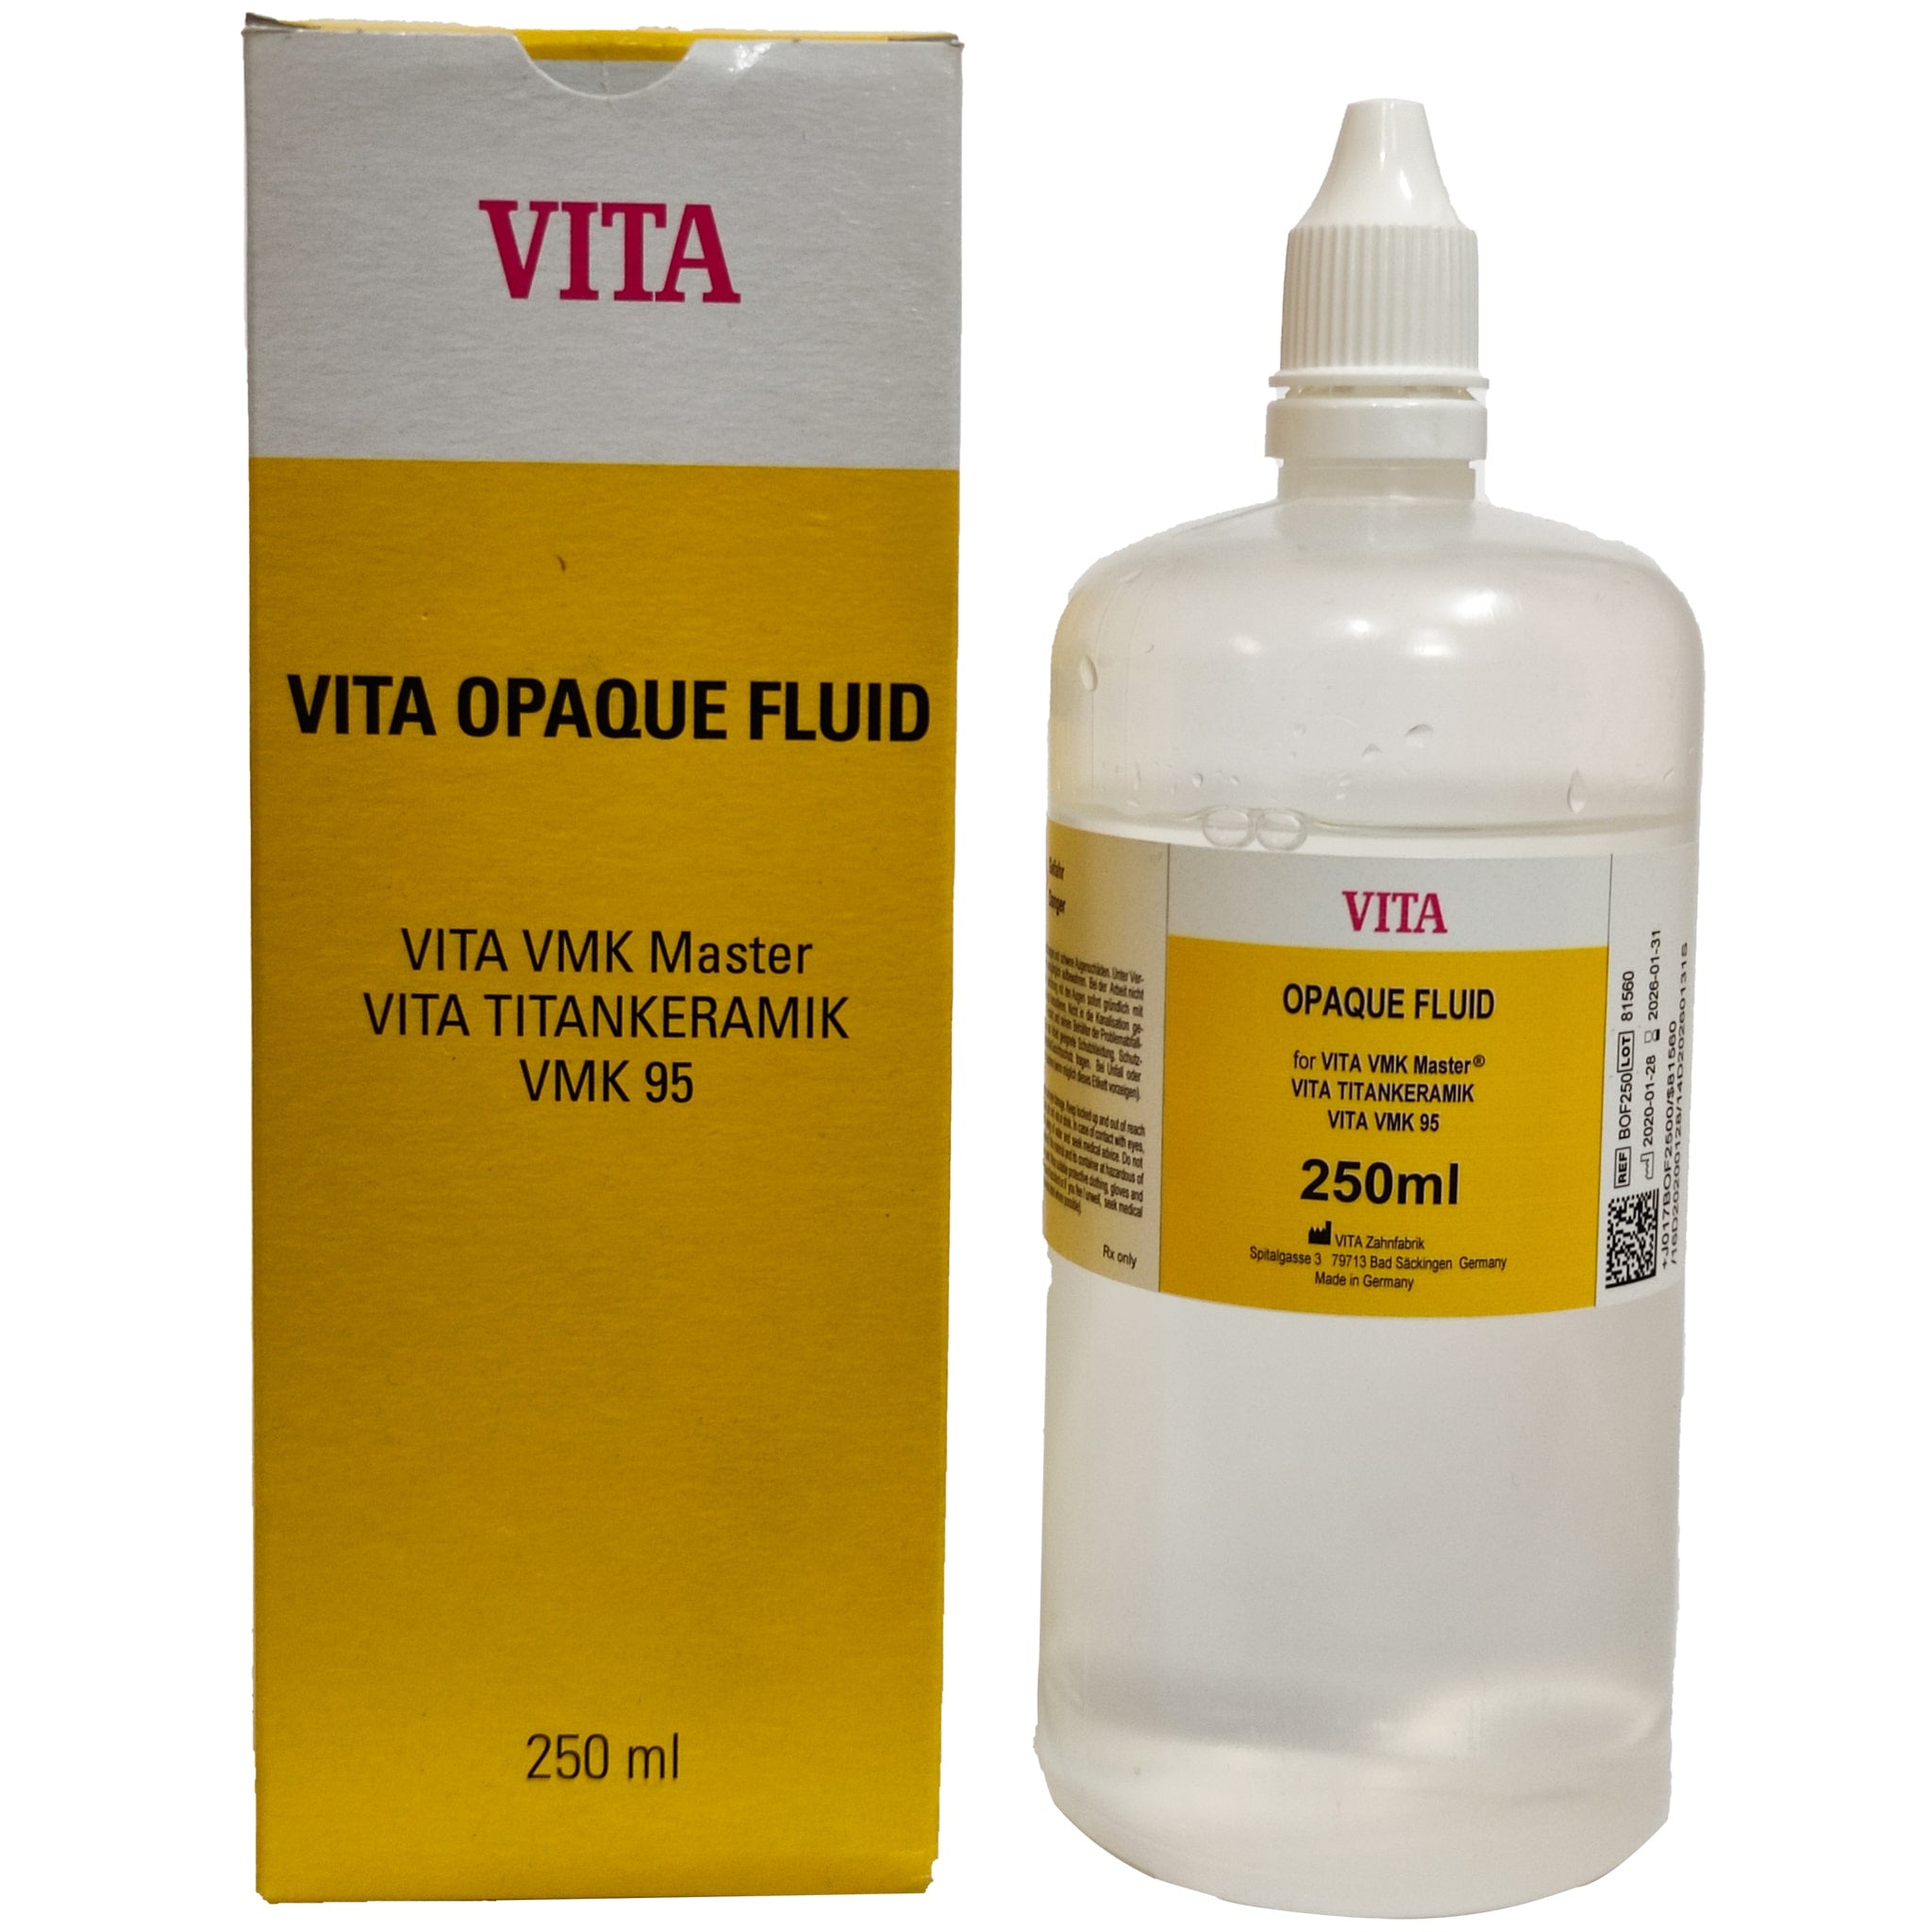 Vita Opaque Fluid